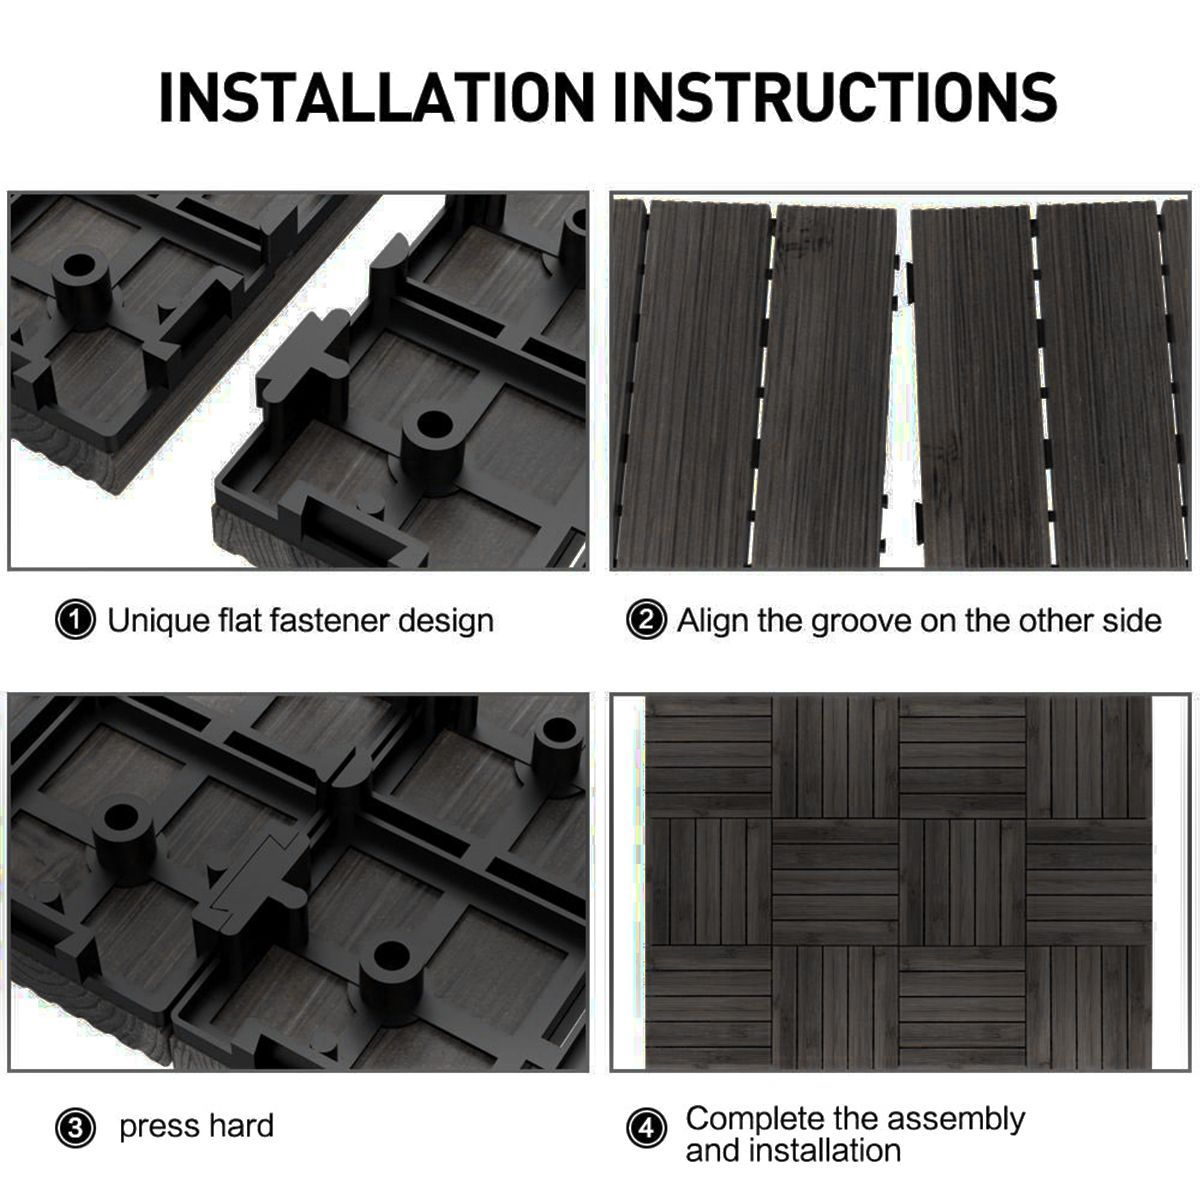 12-x-12-Inch-6-Pack-Outdoor-Four-Slat-Wood-Plastic-Composite-Interlocking-Decking-Tile-Anti-skid-Swi-1564826